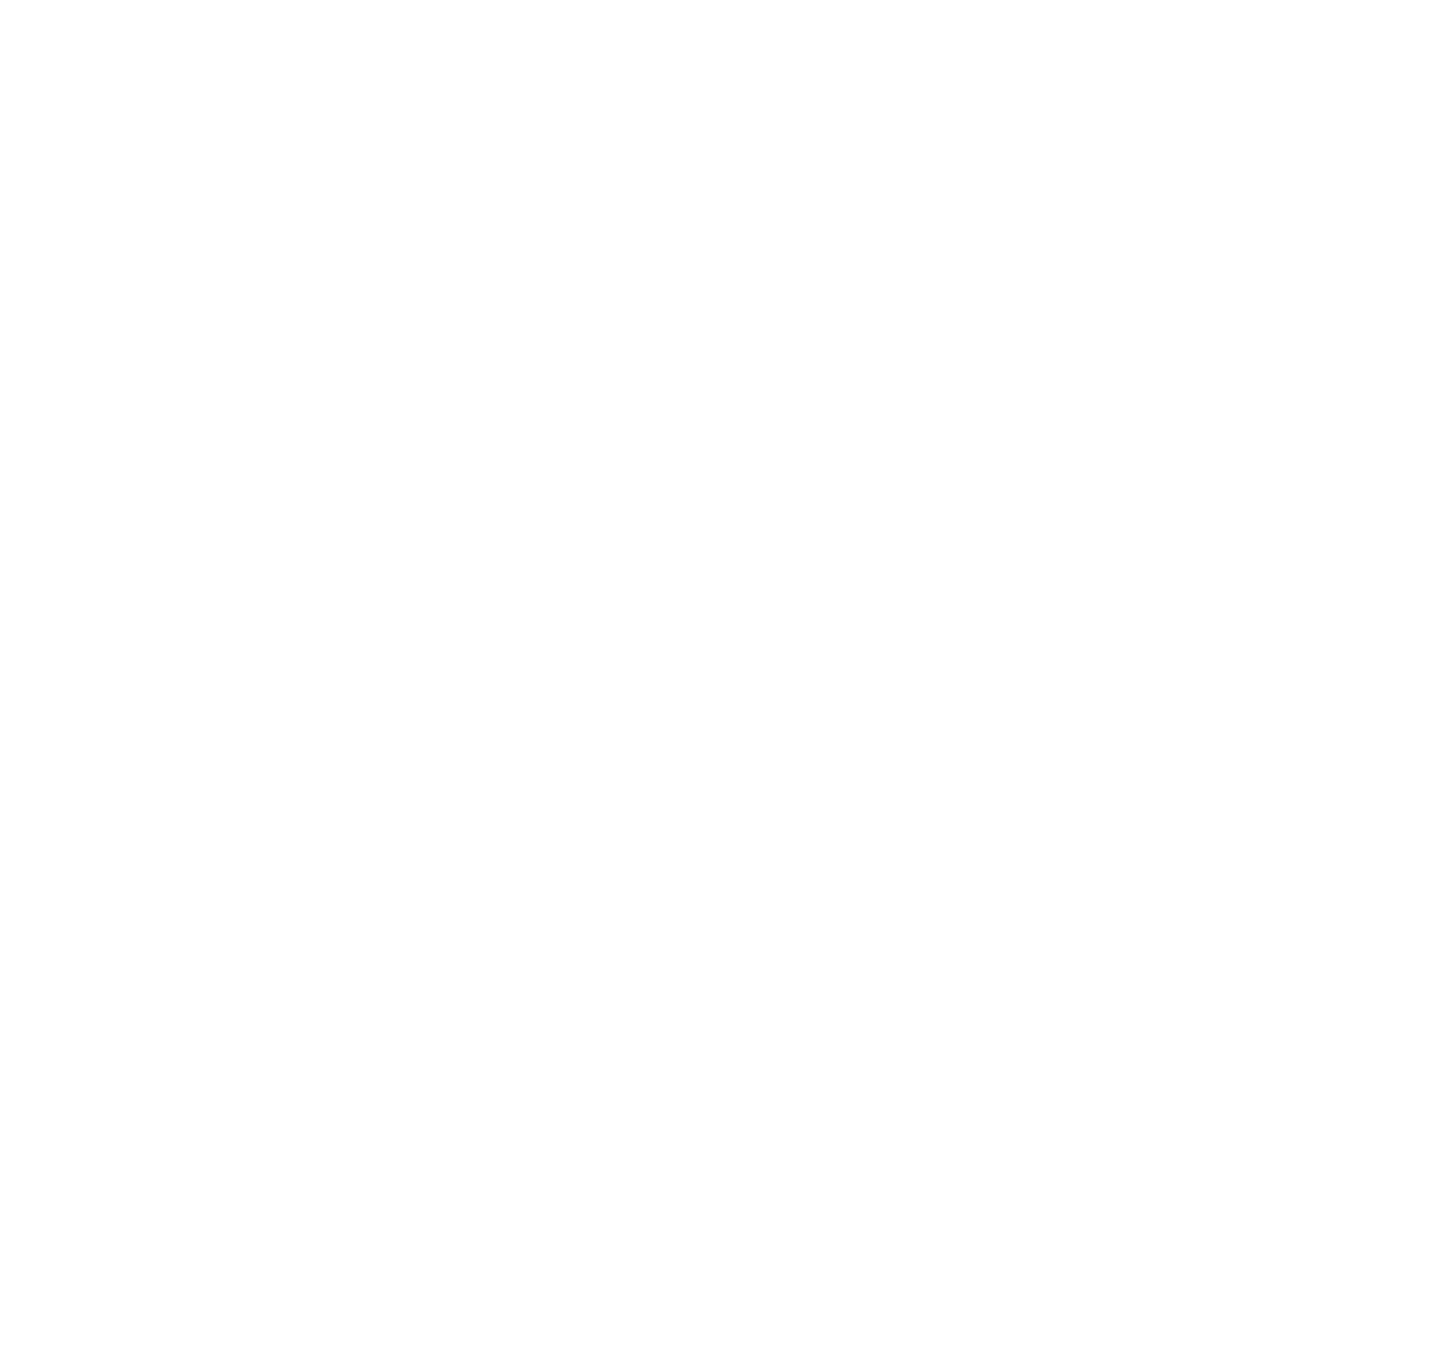 Sportpodd.se